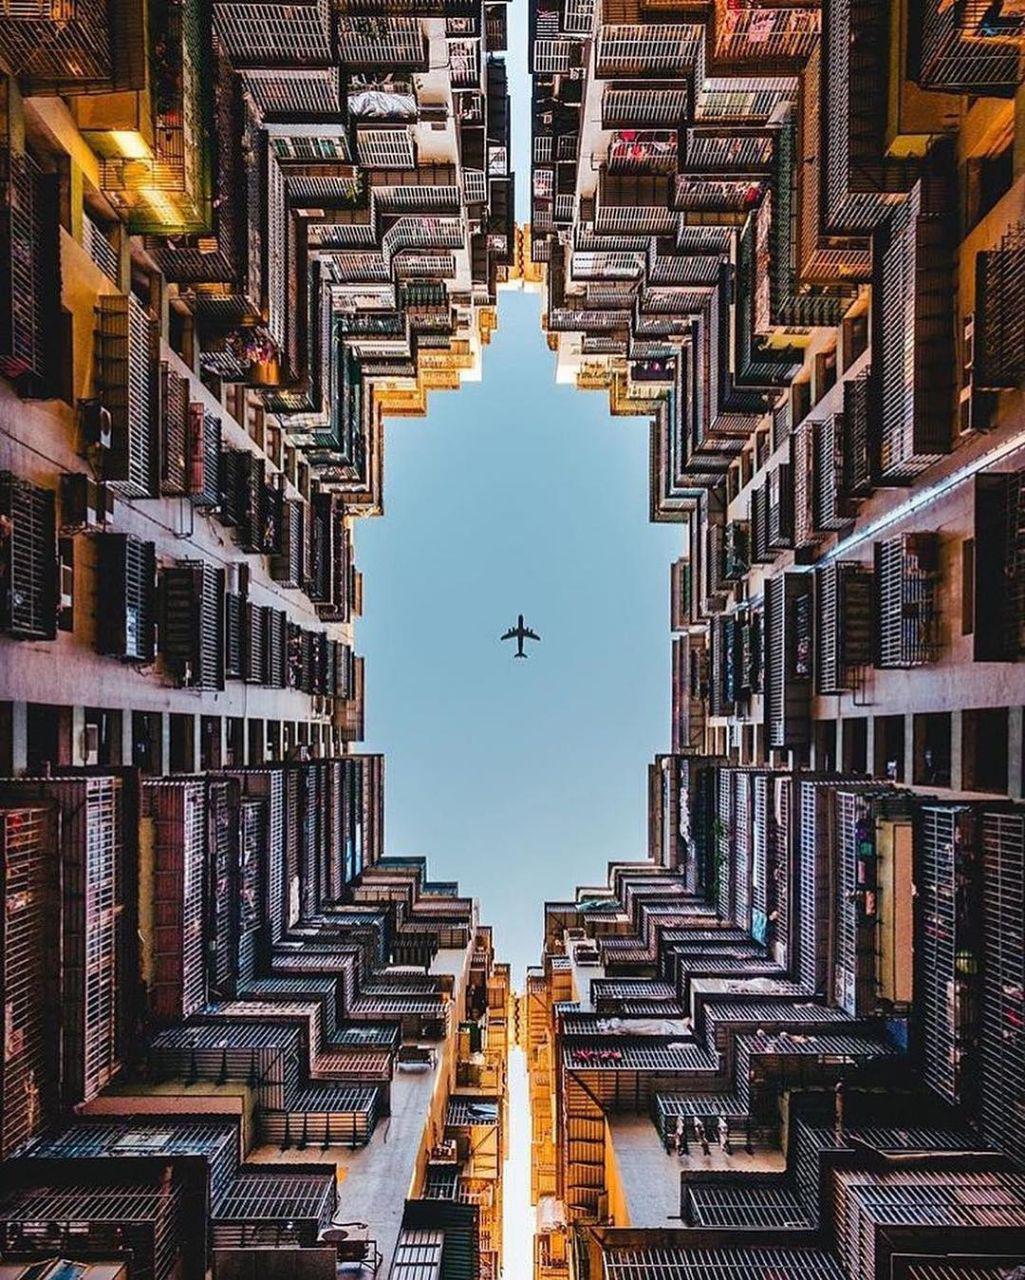 Macao, China